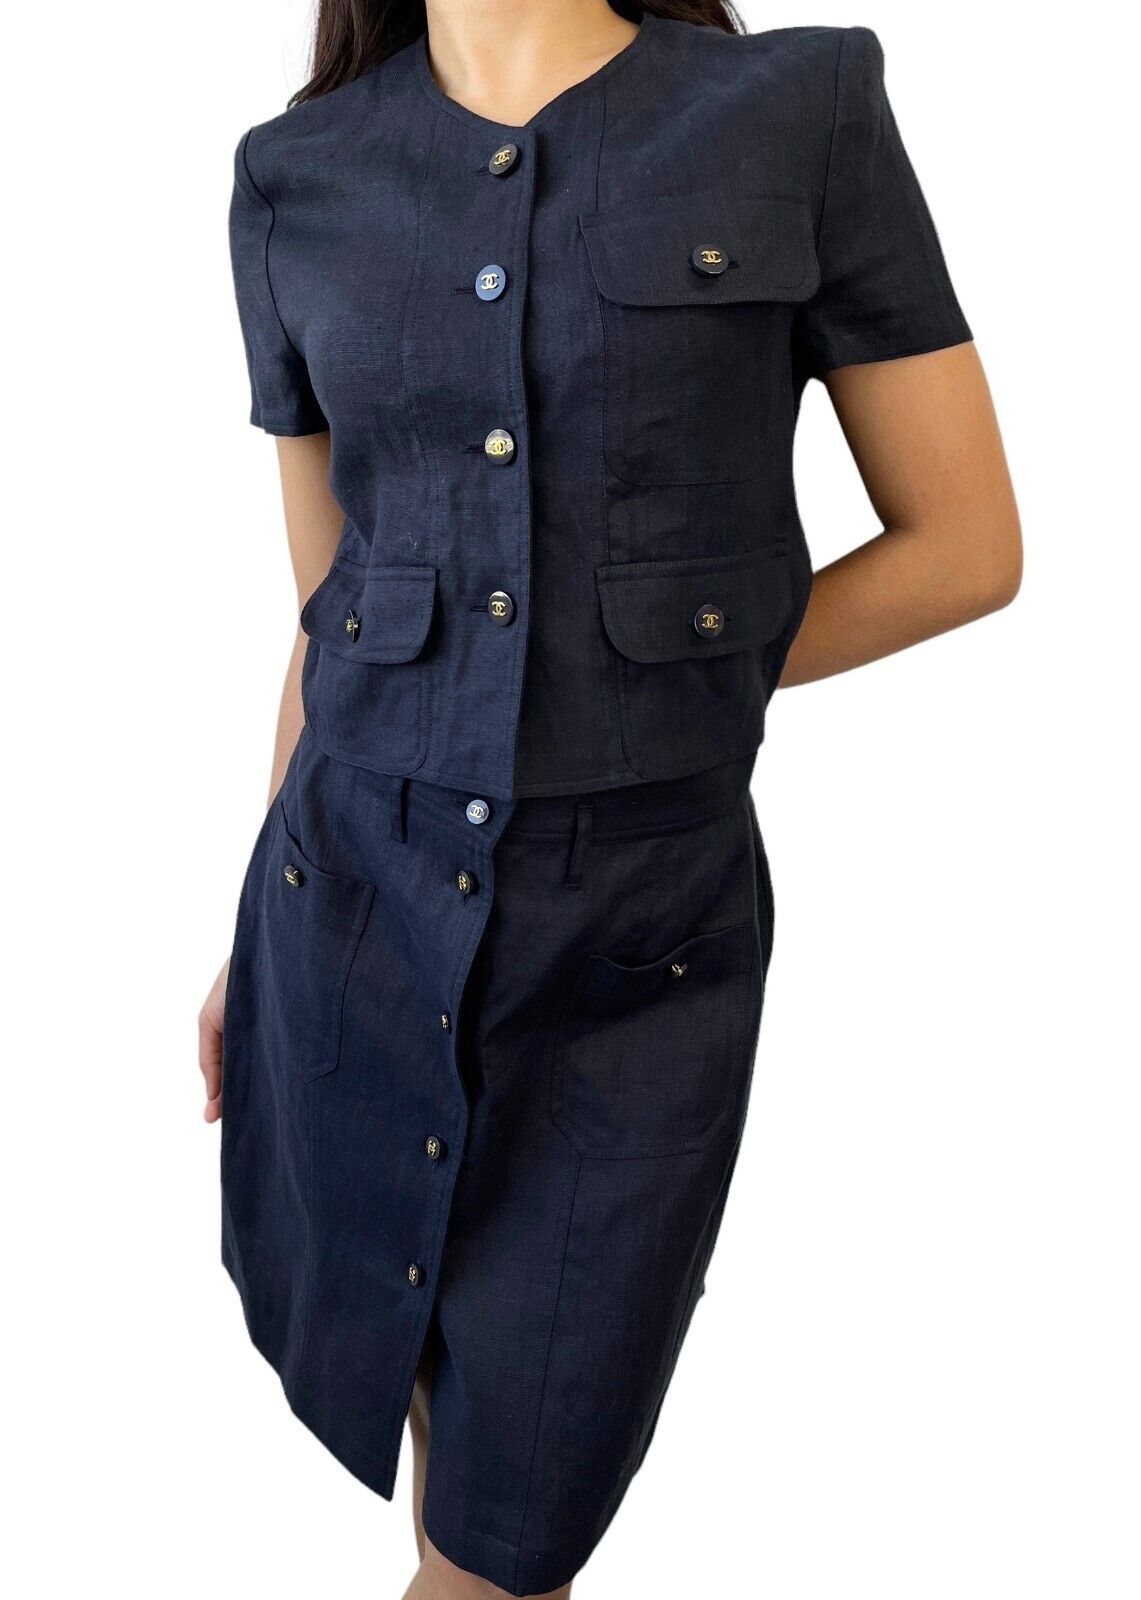 CHANEL Vintage CC Mark Button Linen Jacket Skirt Set #40 Dark Blue Rank AB+